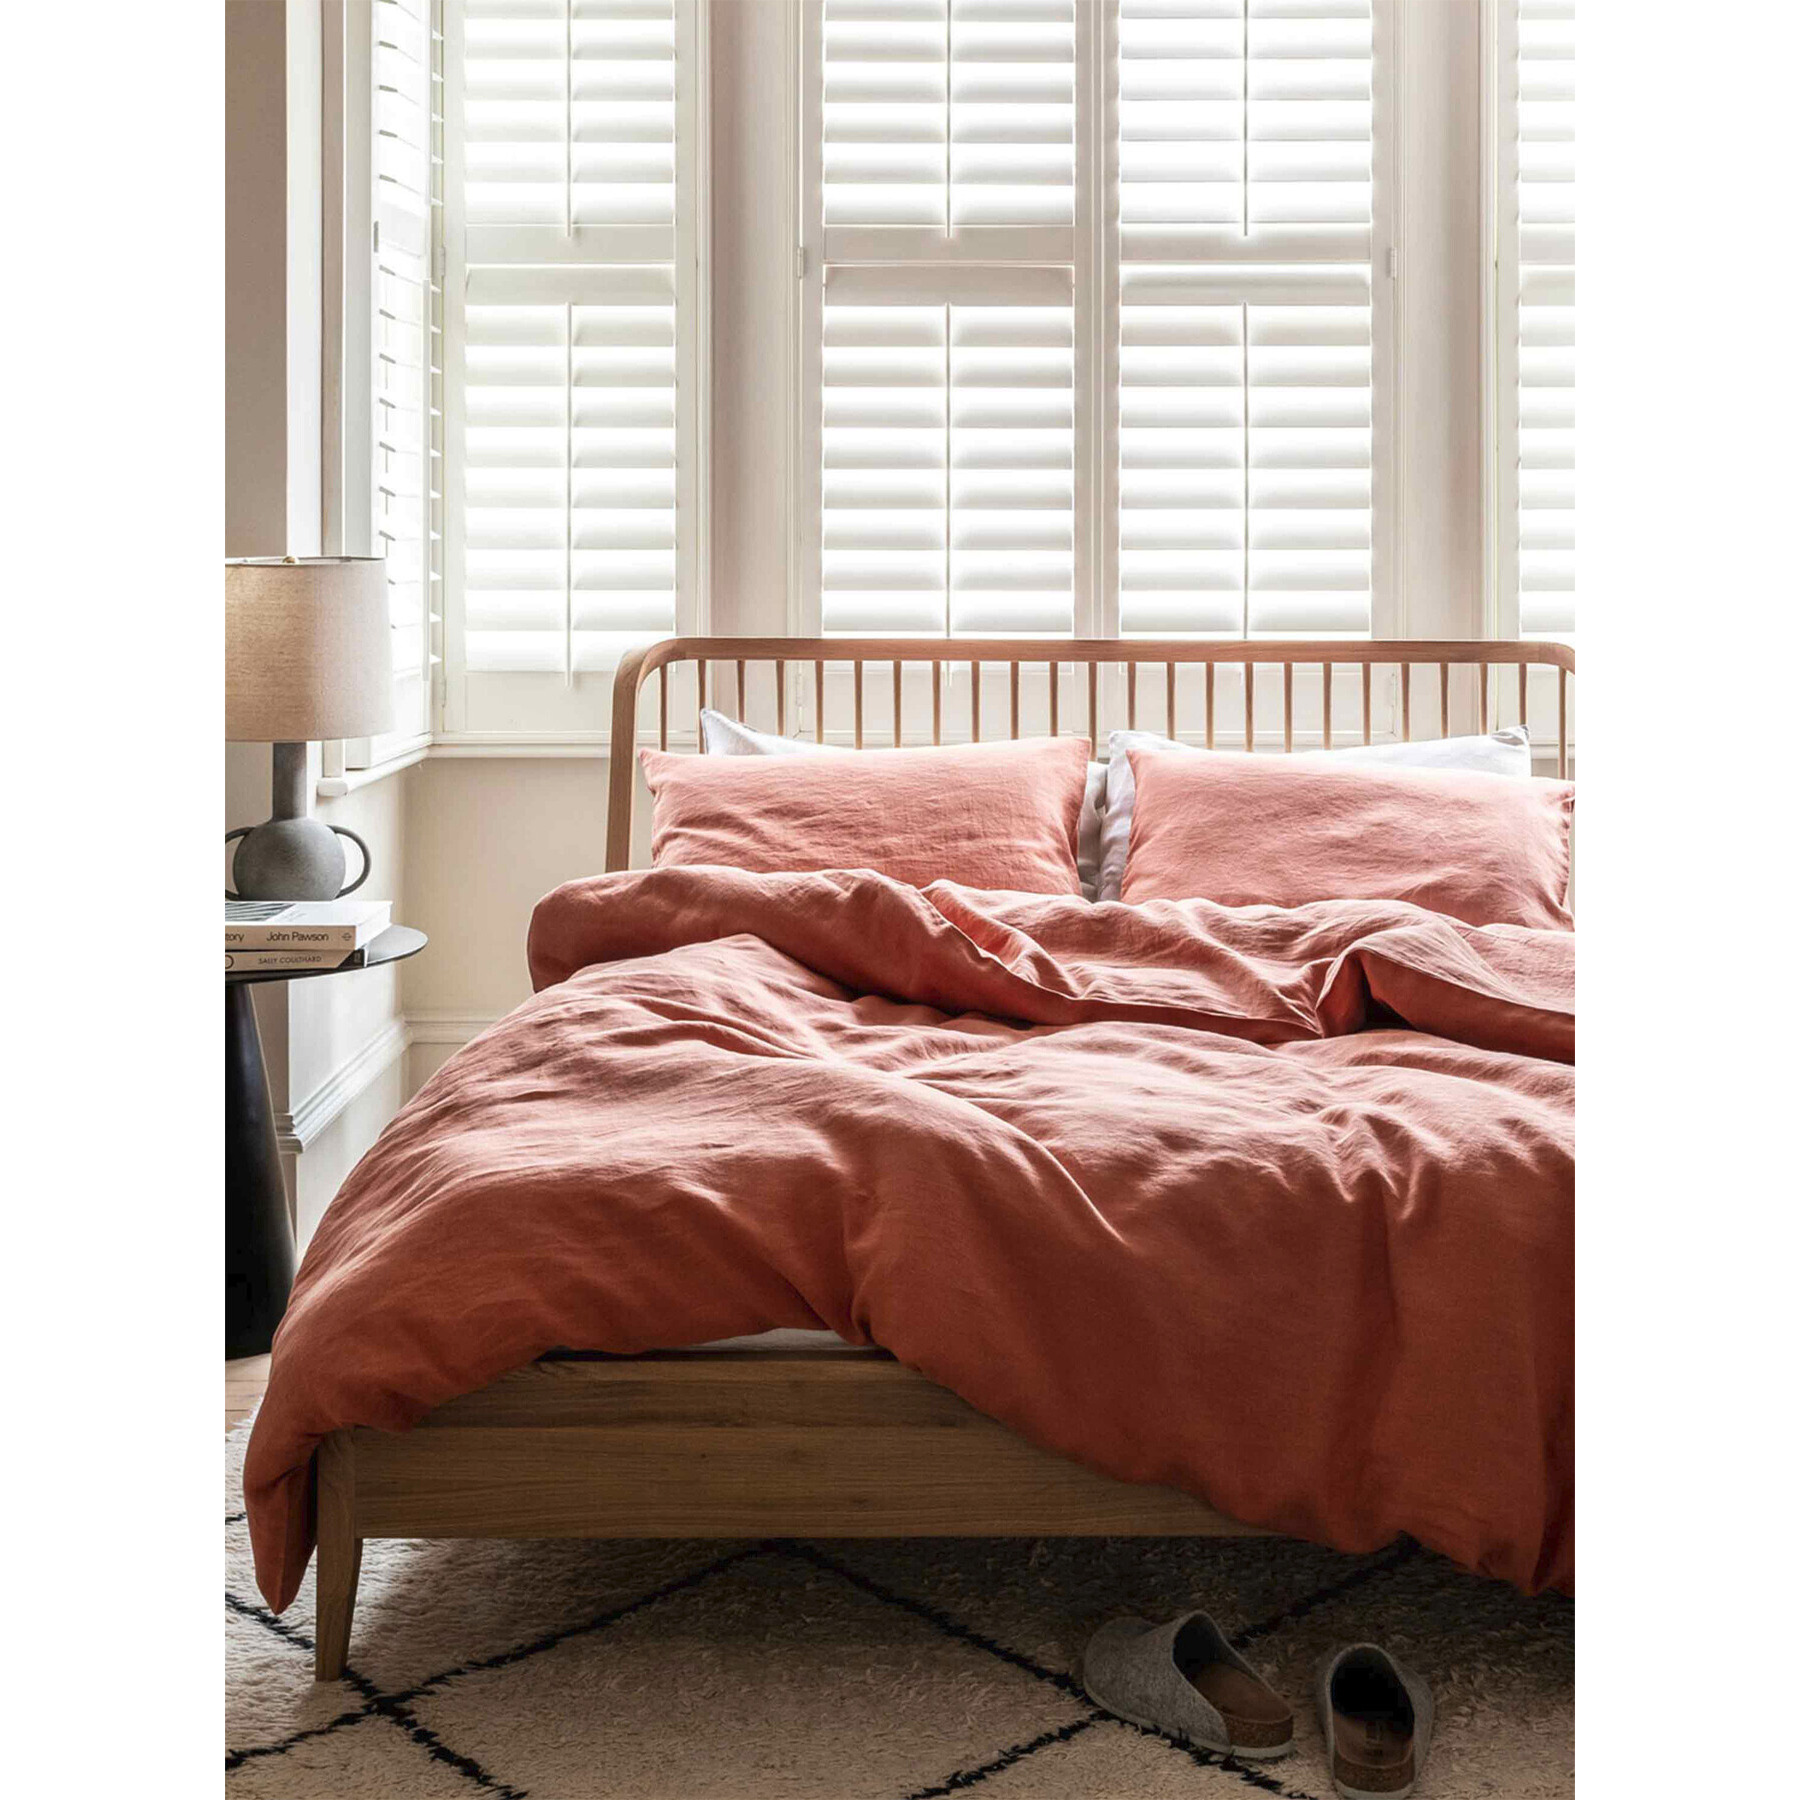 Piglet in Bed Linen Pillowcases (pair) - Size Standard Orange - image 1